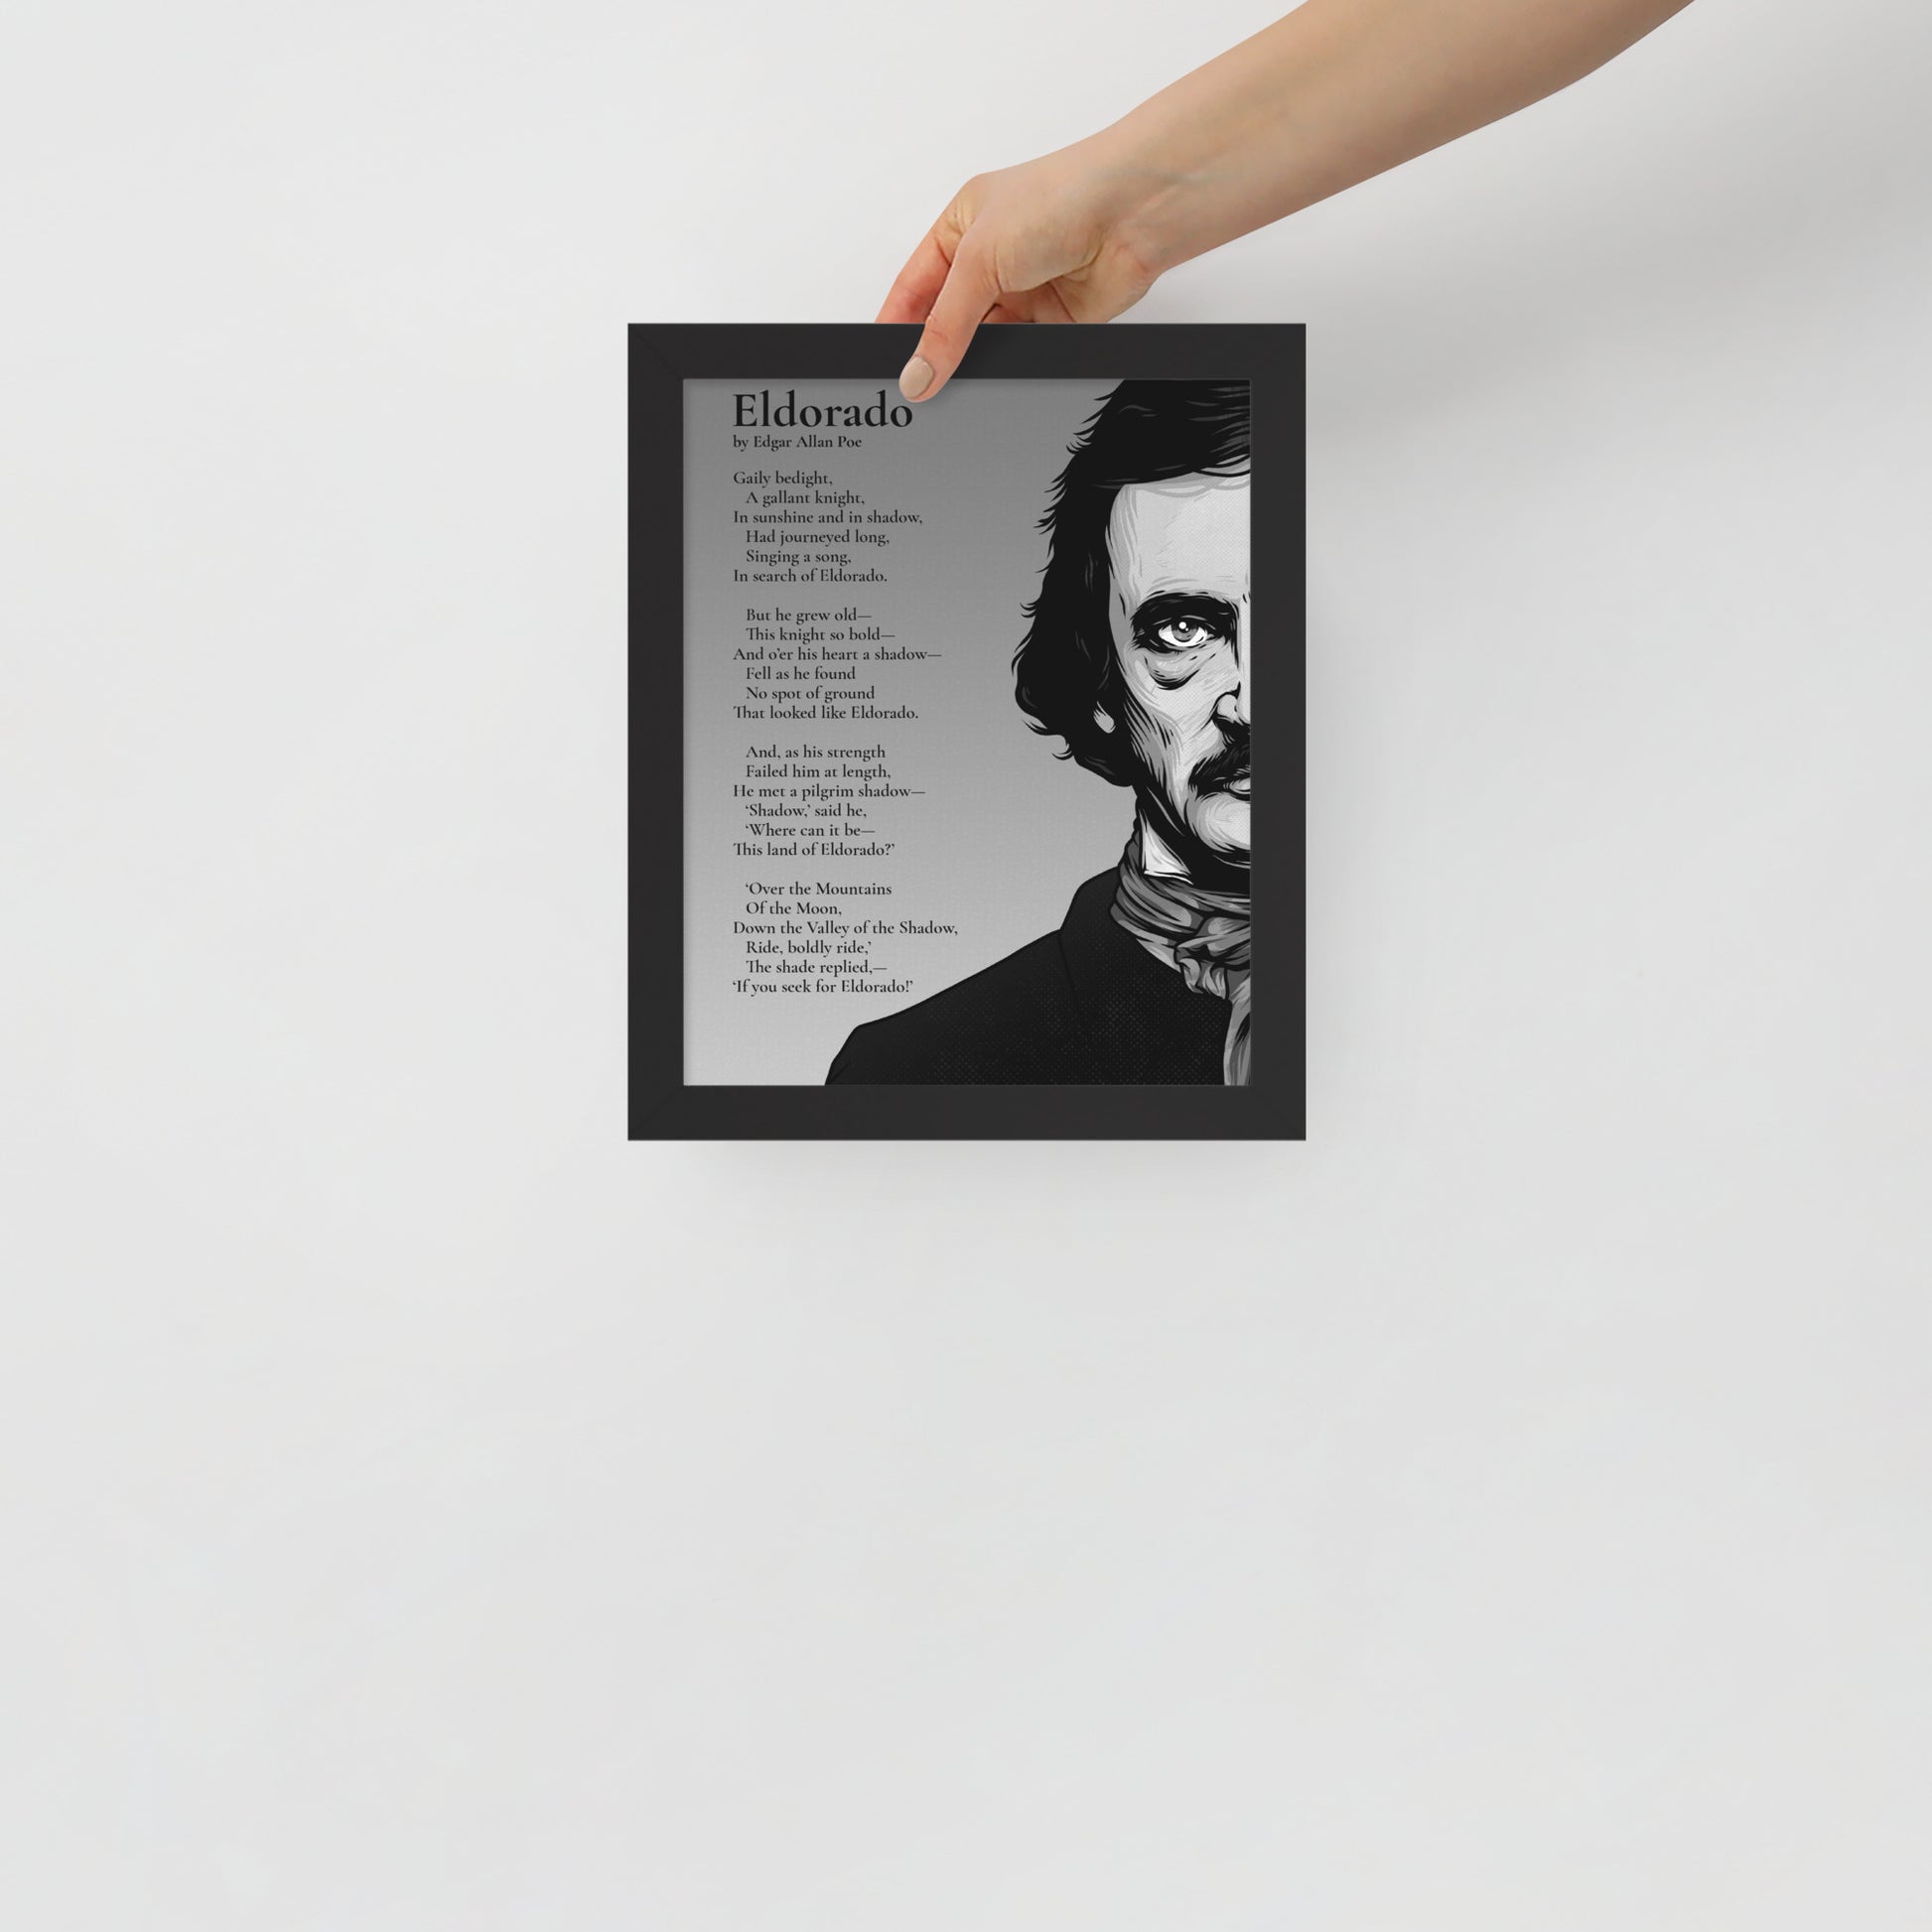 Edgar Allan Poe's 'Eldorado' Framed Matted Poster - 8 x 10 Black Frame